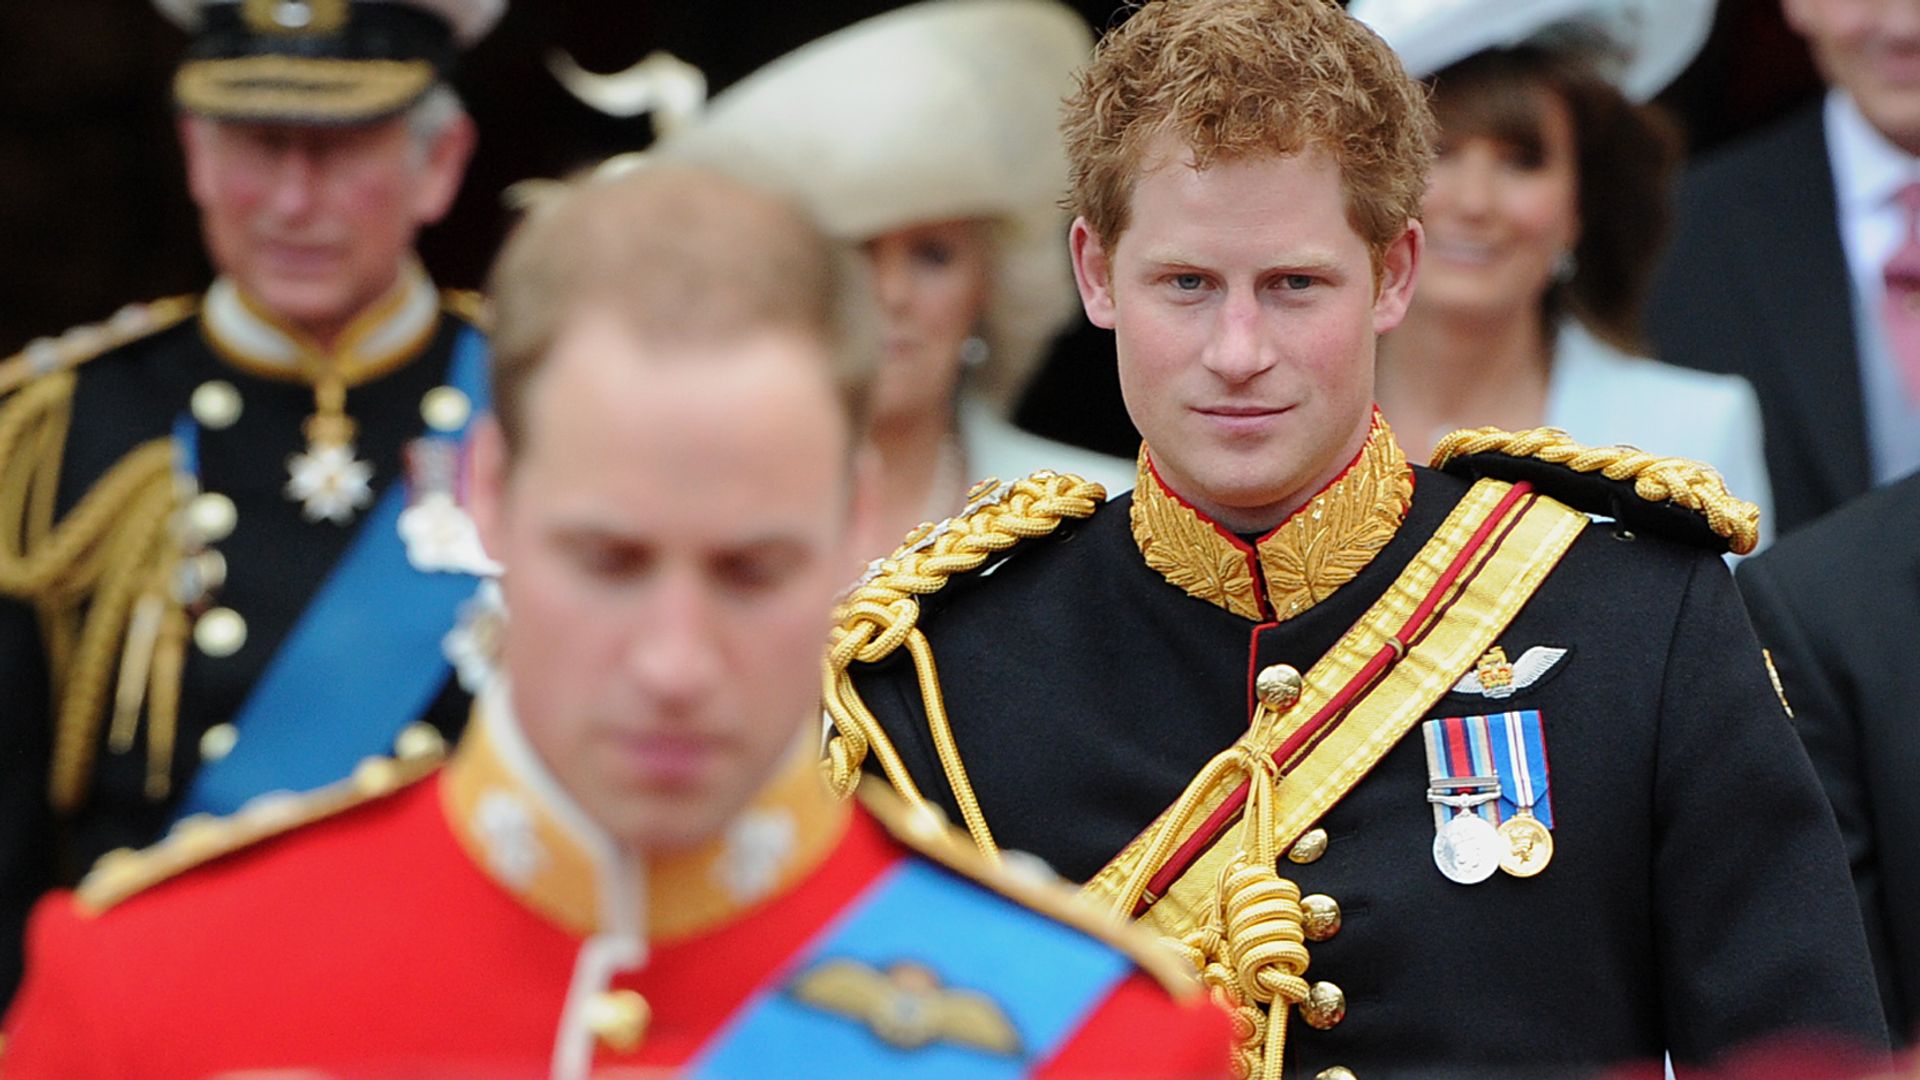 Prince Harry walking behind Prince William at his wedding